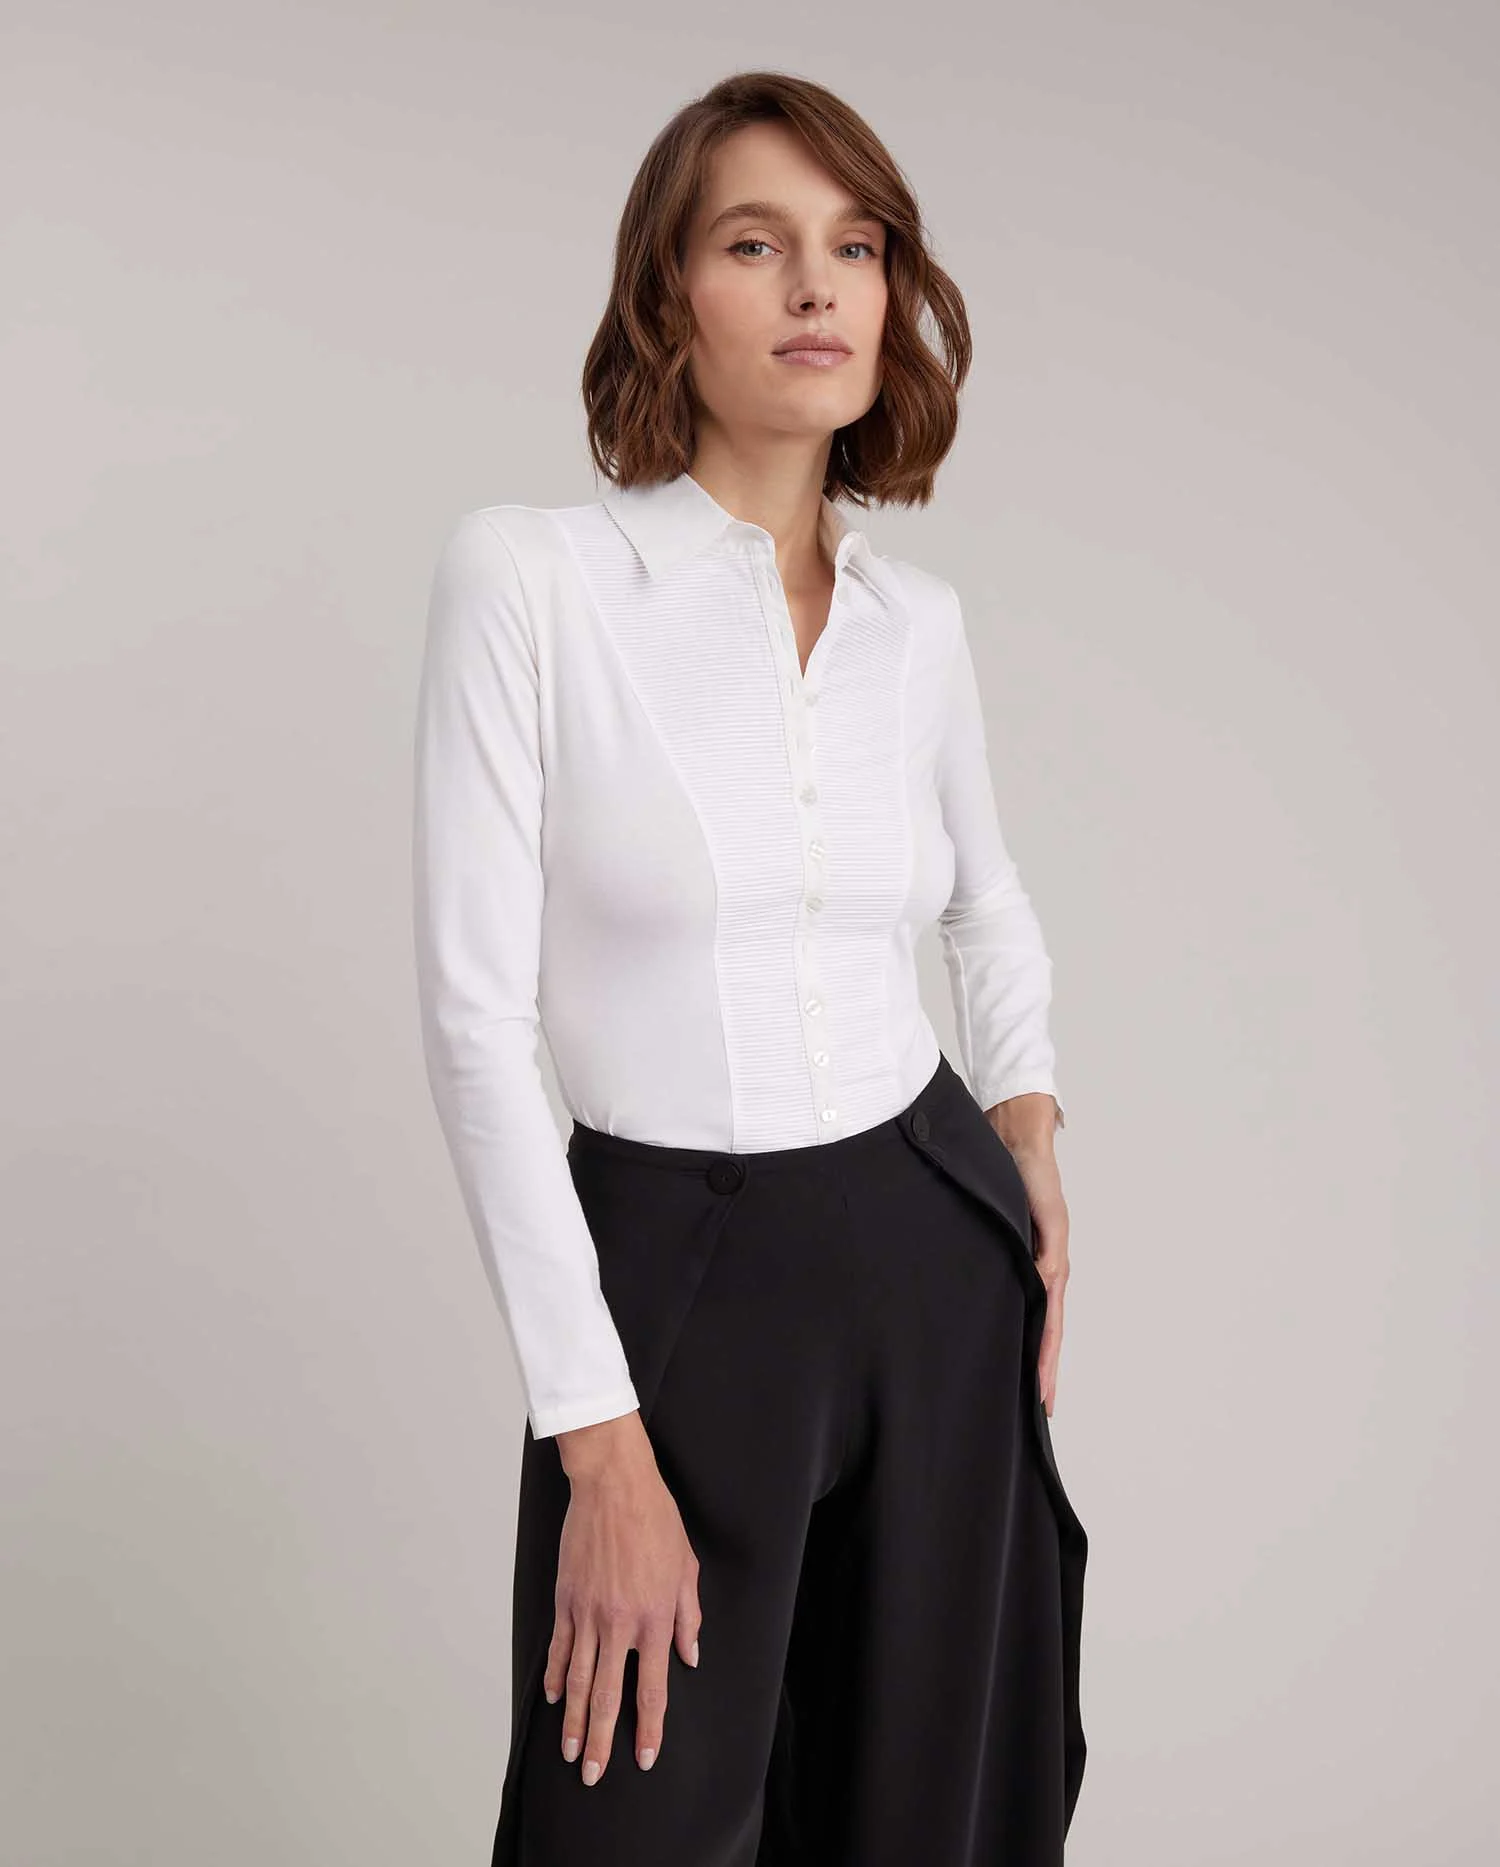 Ladies Womens Long Sleeve Blouses Office Shirts Work Formal Smart